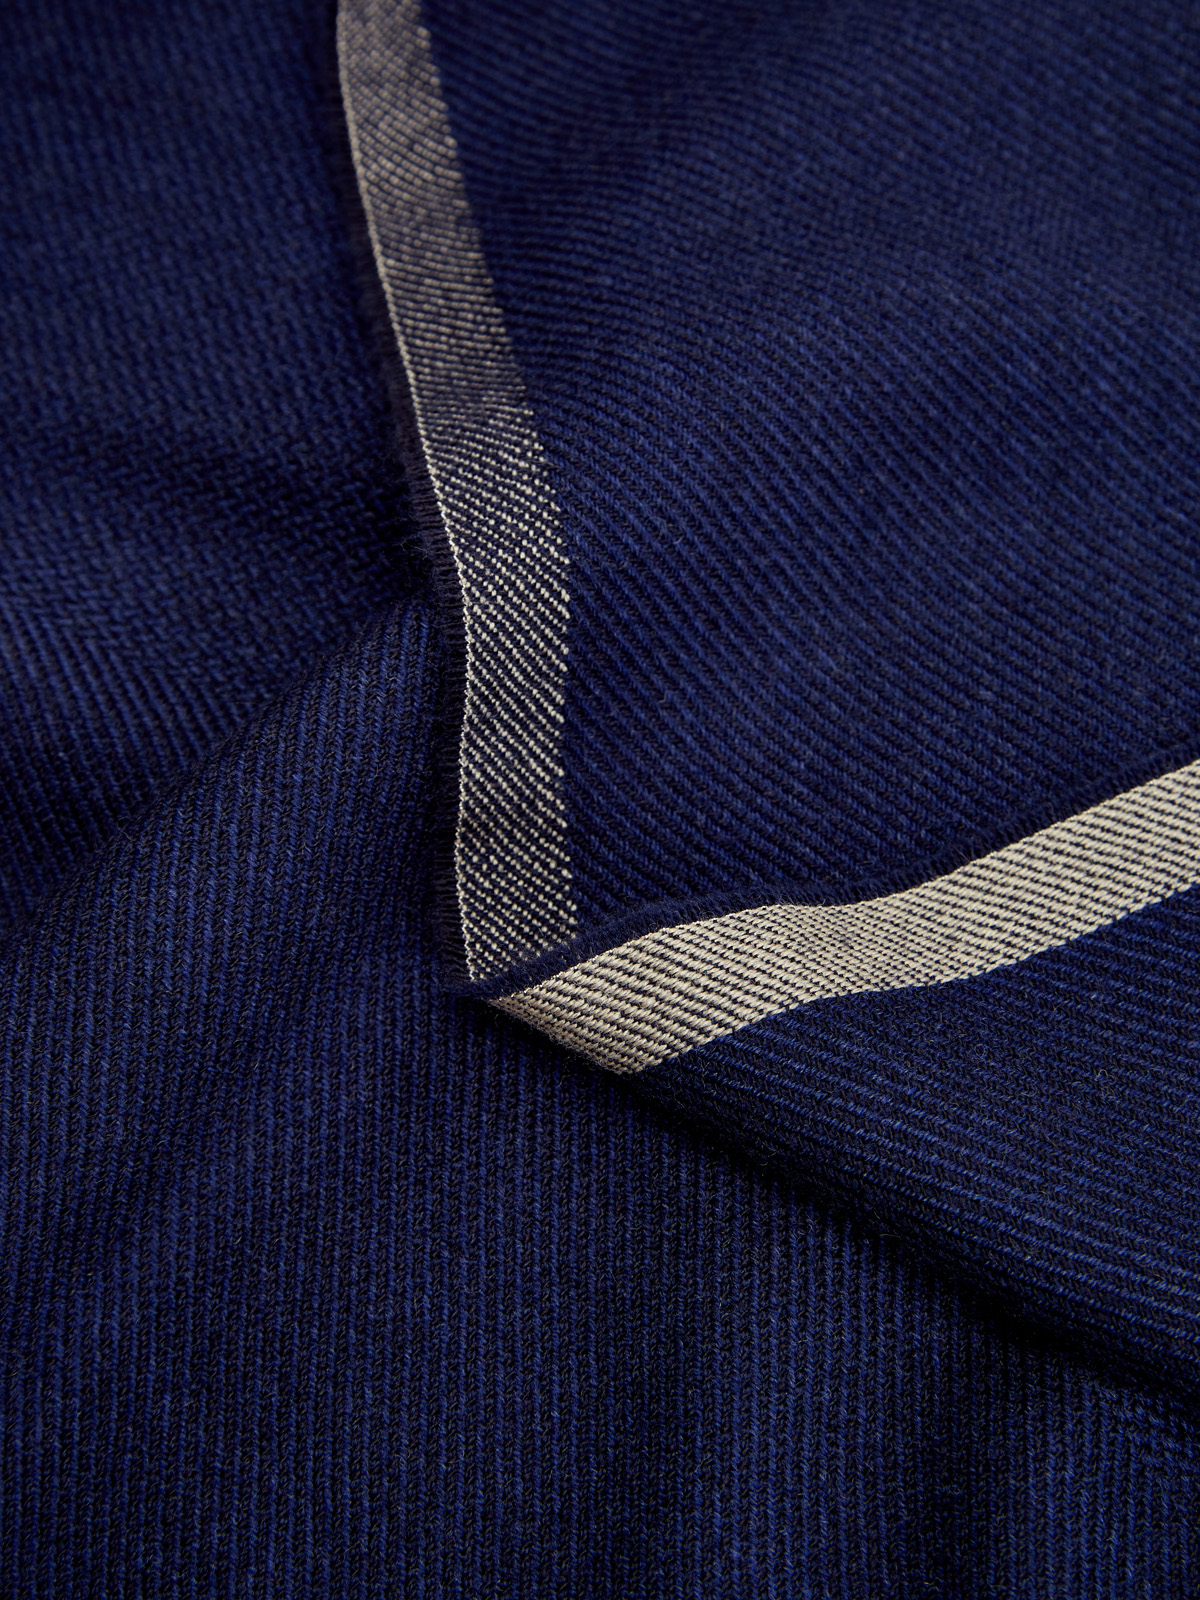 Шарф из мягкой пряжи на основе шерсти и кашемира BRUNELLO CUCINELLI, цвет синий, размер M;L - фото 2